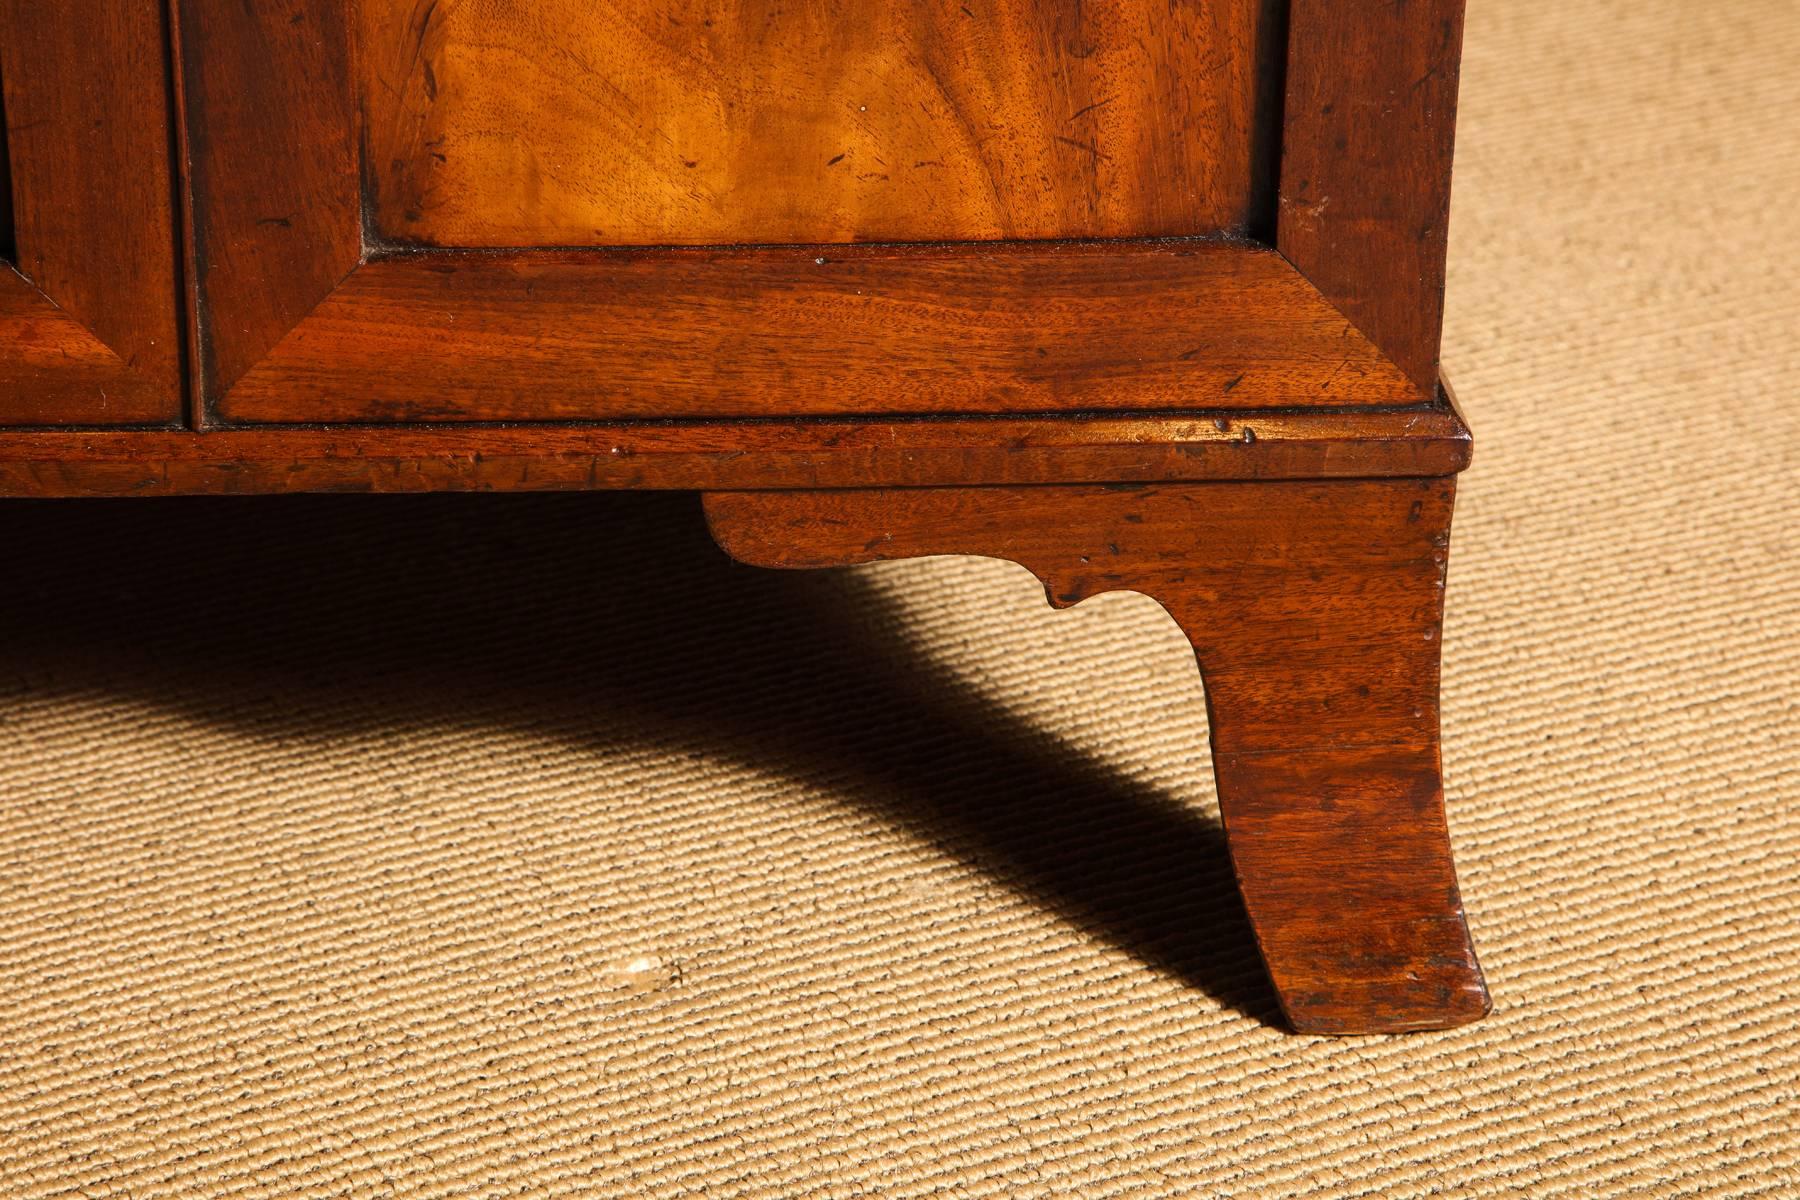 Regency Mahogany Hinger Davenport Desk with Hidden Compartments, circa 1800 For Sale 2